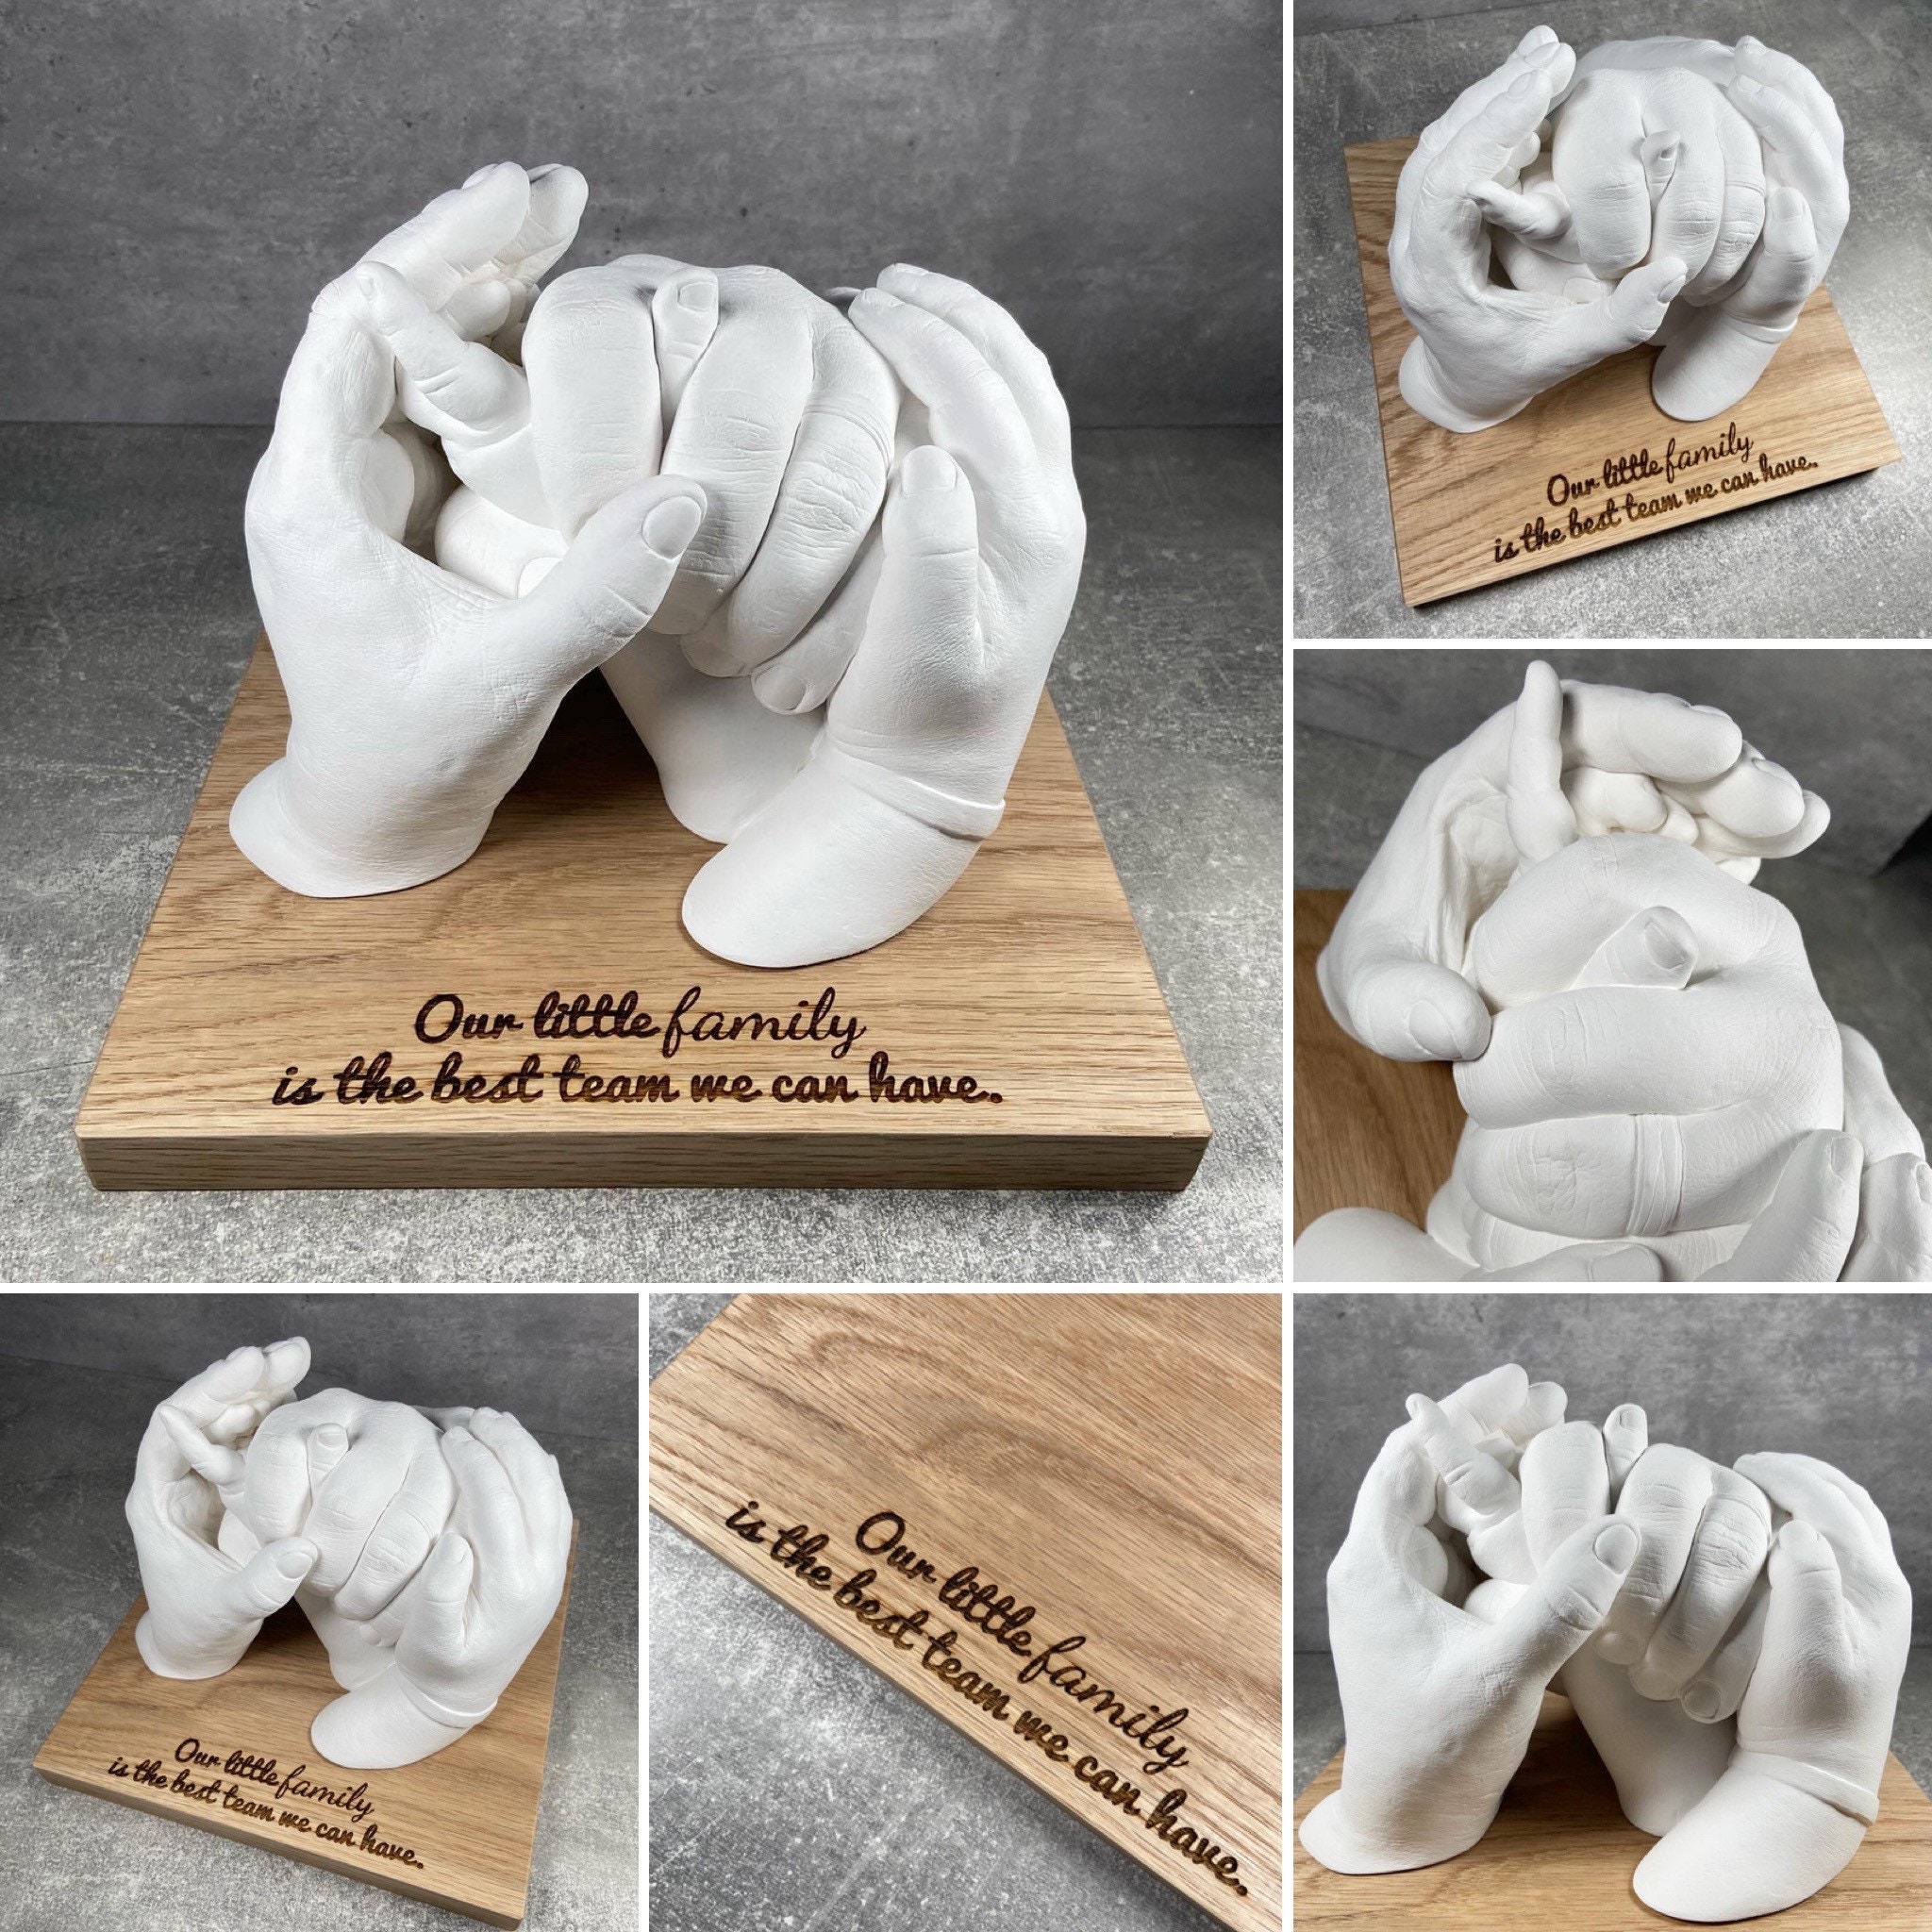 Keepsake Hand Casting Kit Hand Molding Casting Kit Plaster Hand Mold  Keepsake Sculpture Diy Gift For Couples Anniversary Infant Wedi Man  Jiadding Fami